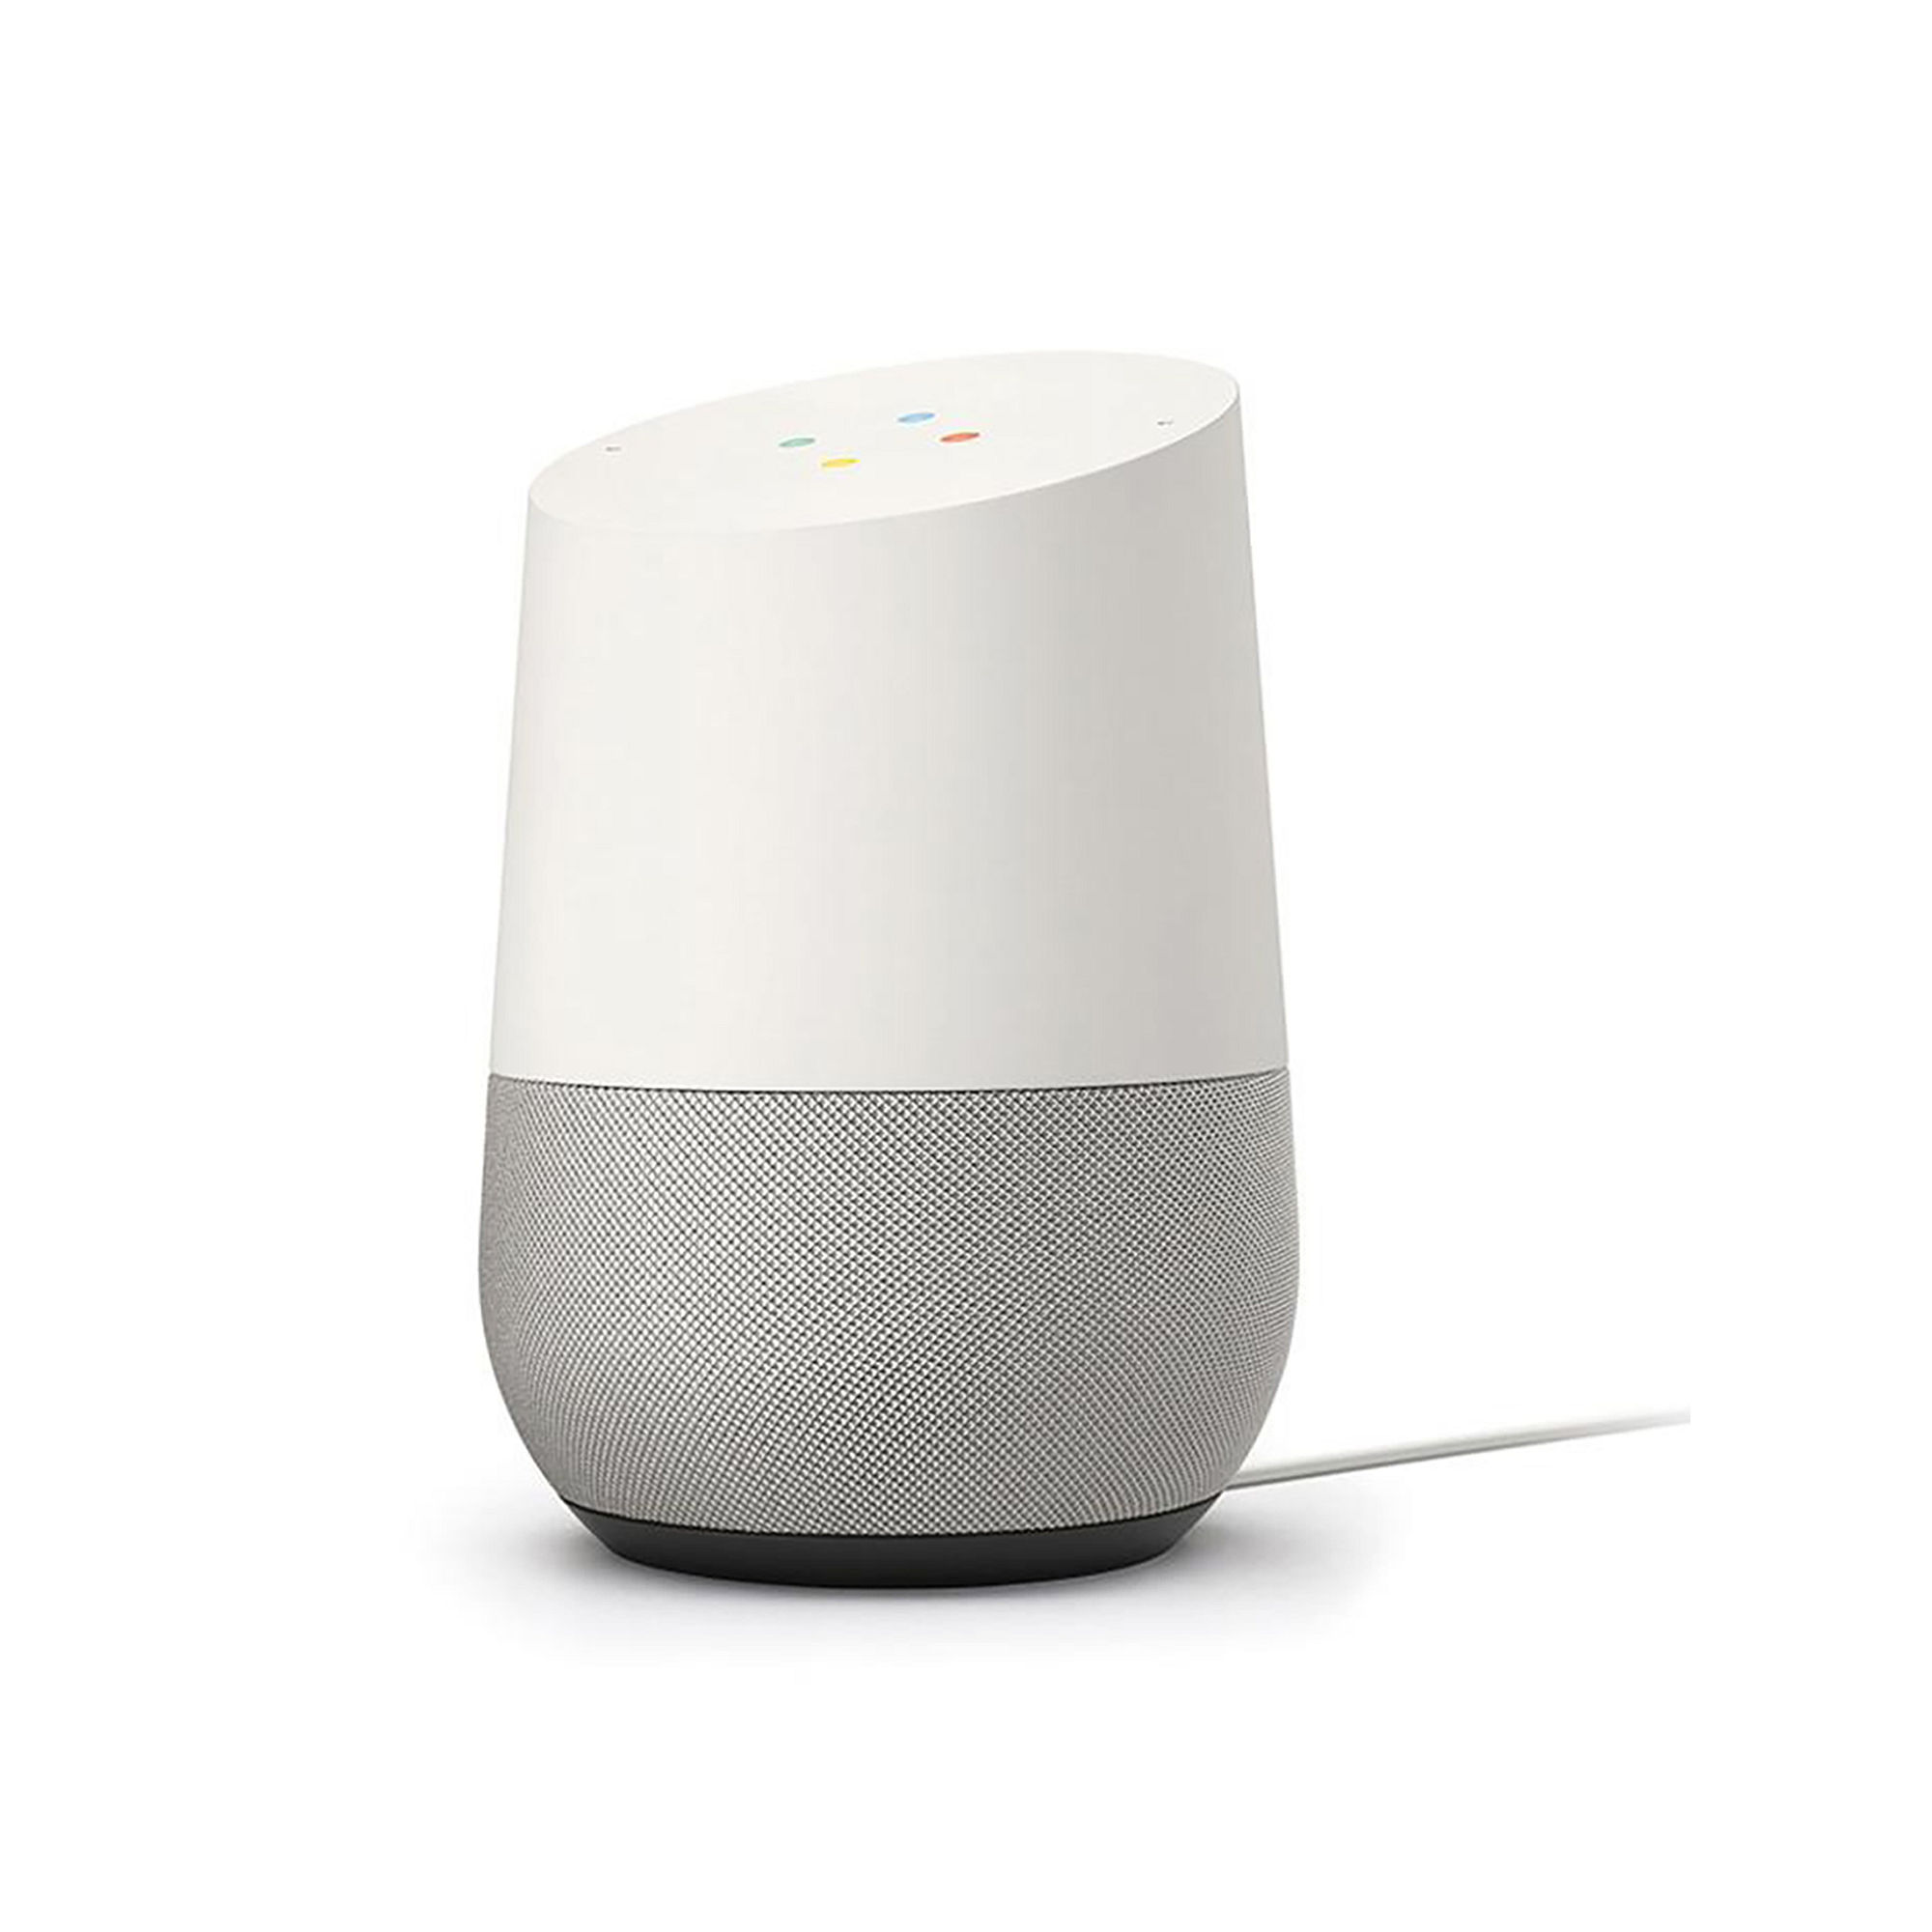 Google Home - Smart Speaker & Google Assistant, Light Grey & White - image 2 of 8